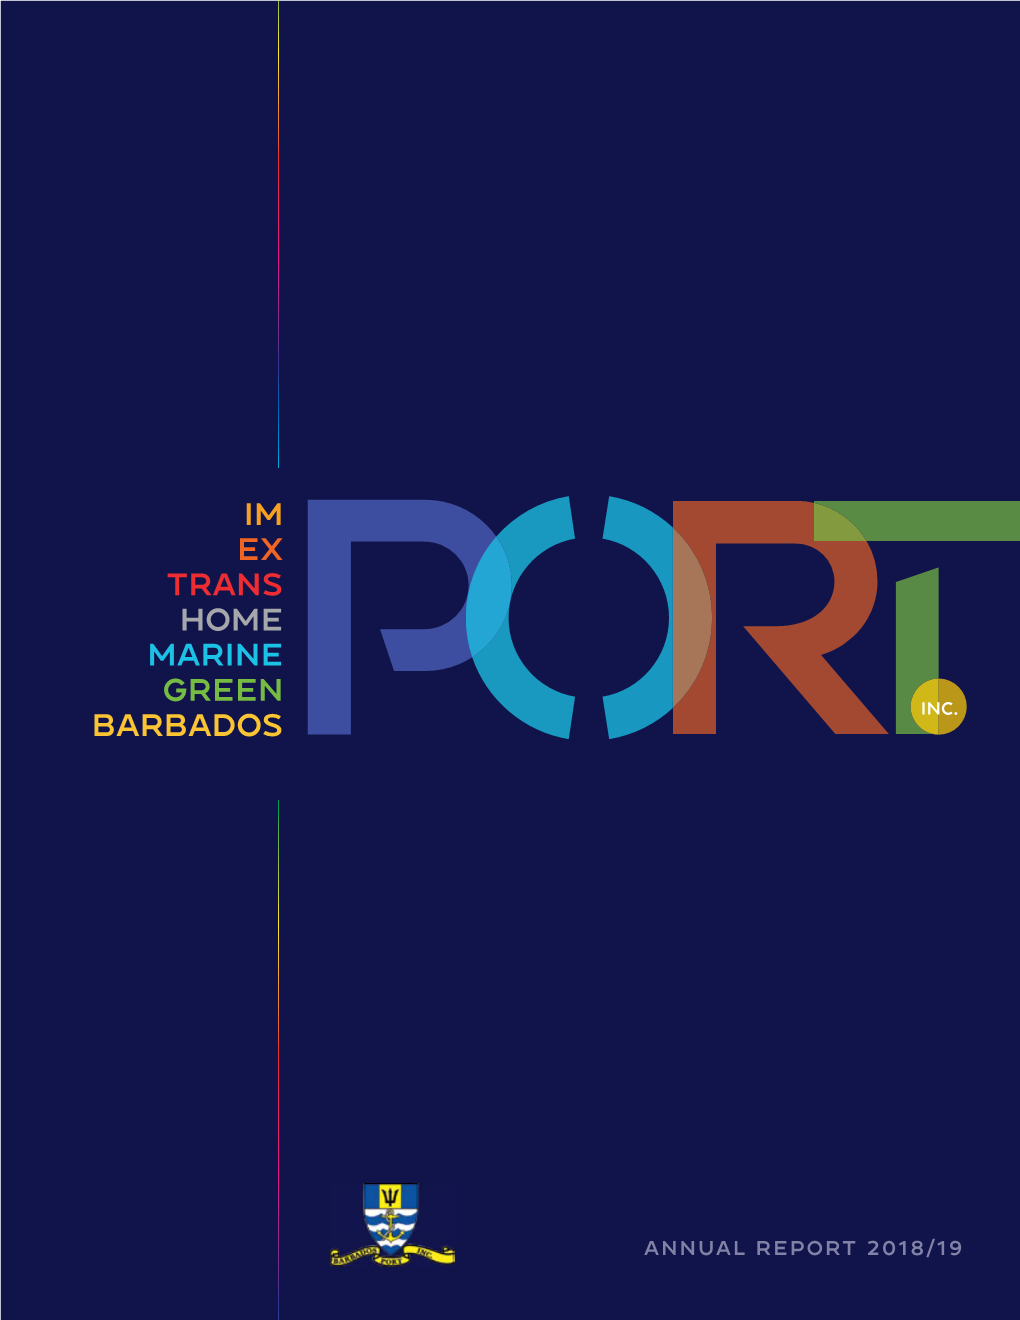 Barbados Port Inc Annual Report 2019